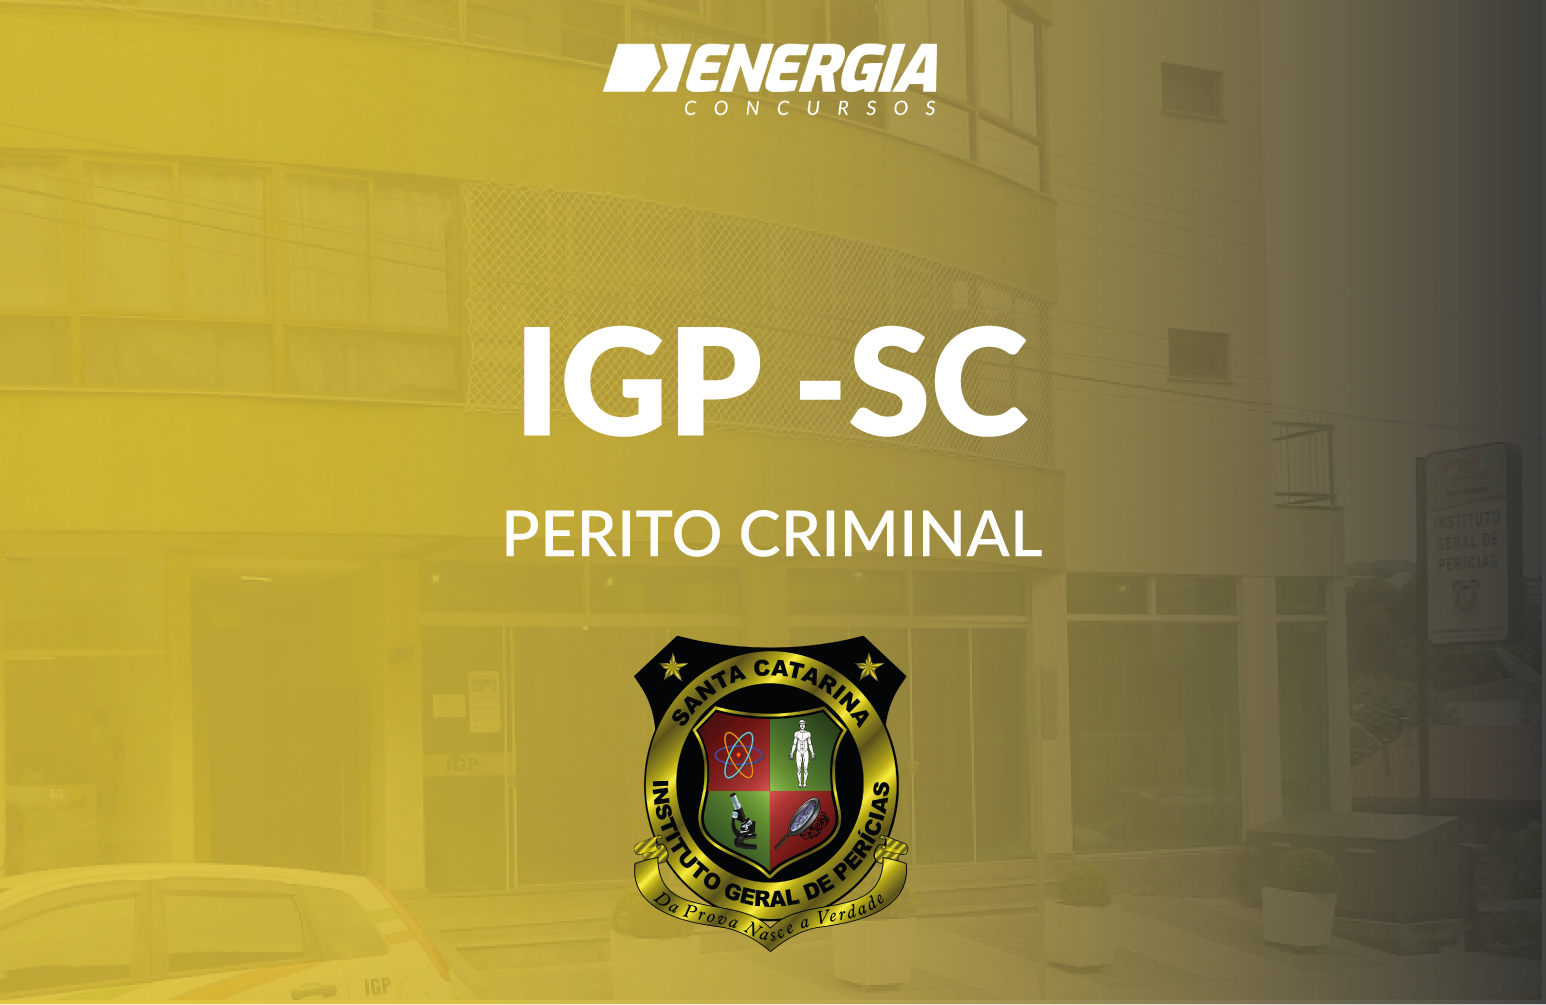 IGP SC - Perito Criminal (Área Criminal Geral)